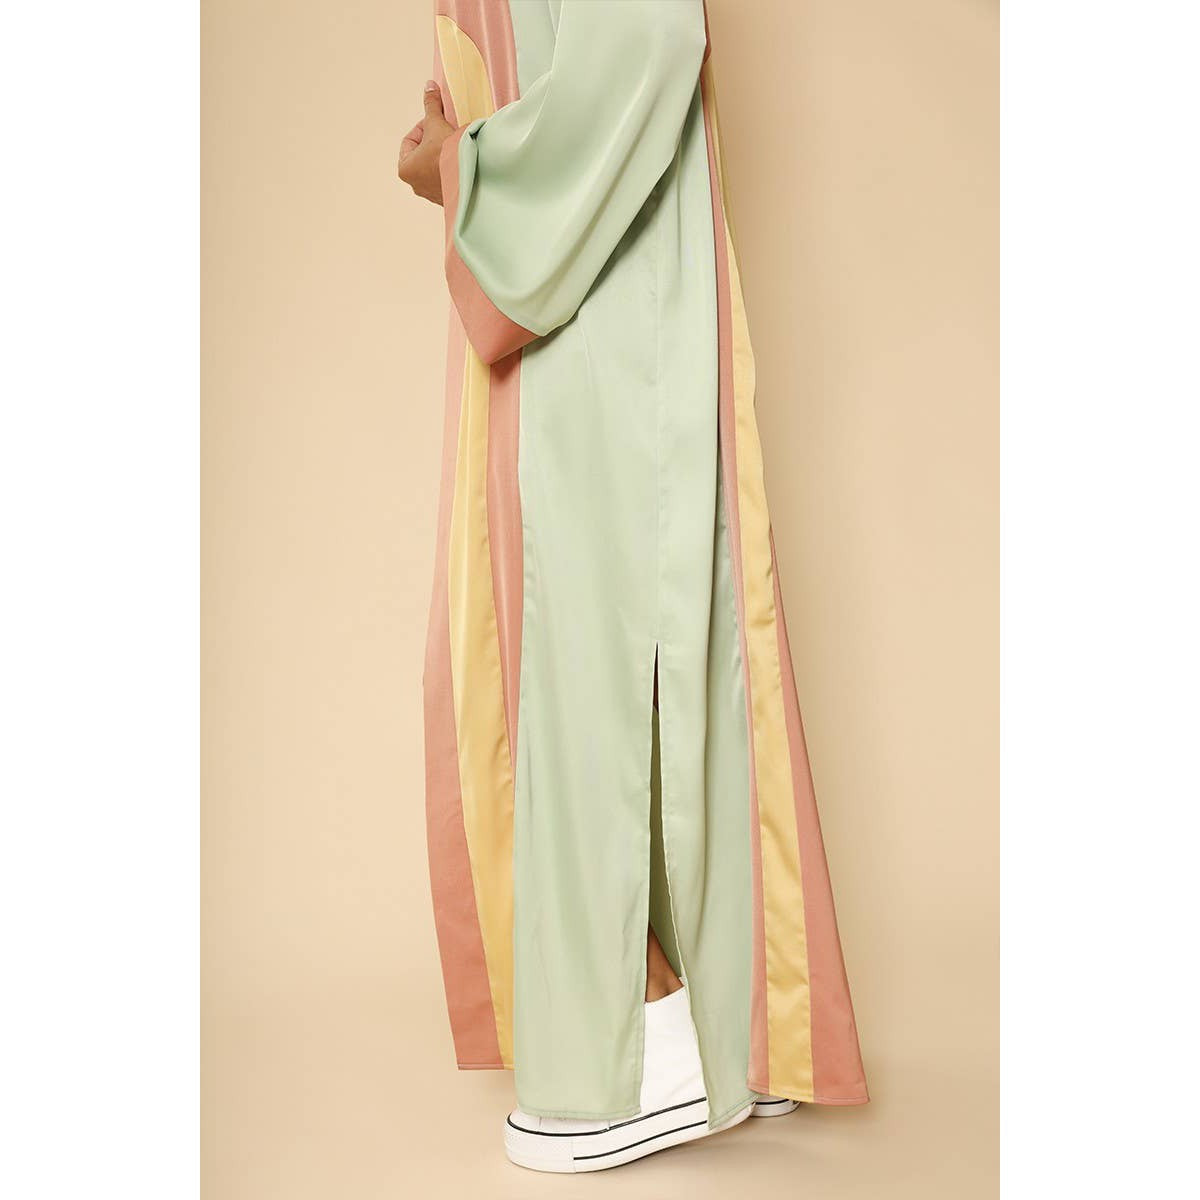 Miss Sparkling Retro Arch Kimono Big Long Textured Satin Duster | Light Jacket, Outdoor Robe, Swimsuit Coverup | Sizes SM-XL